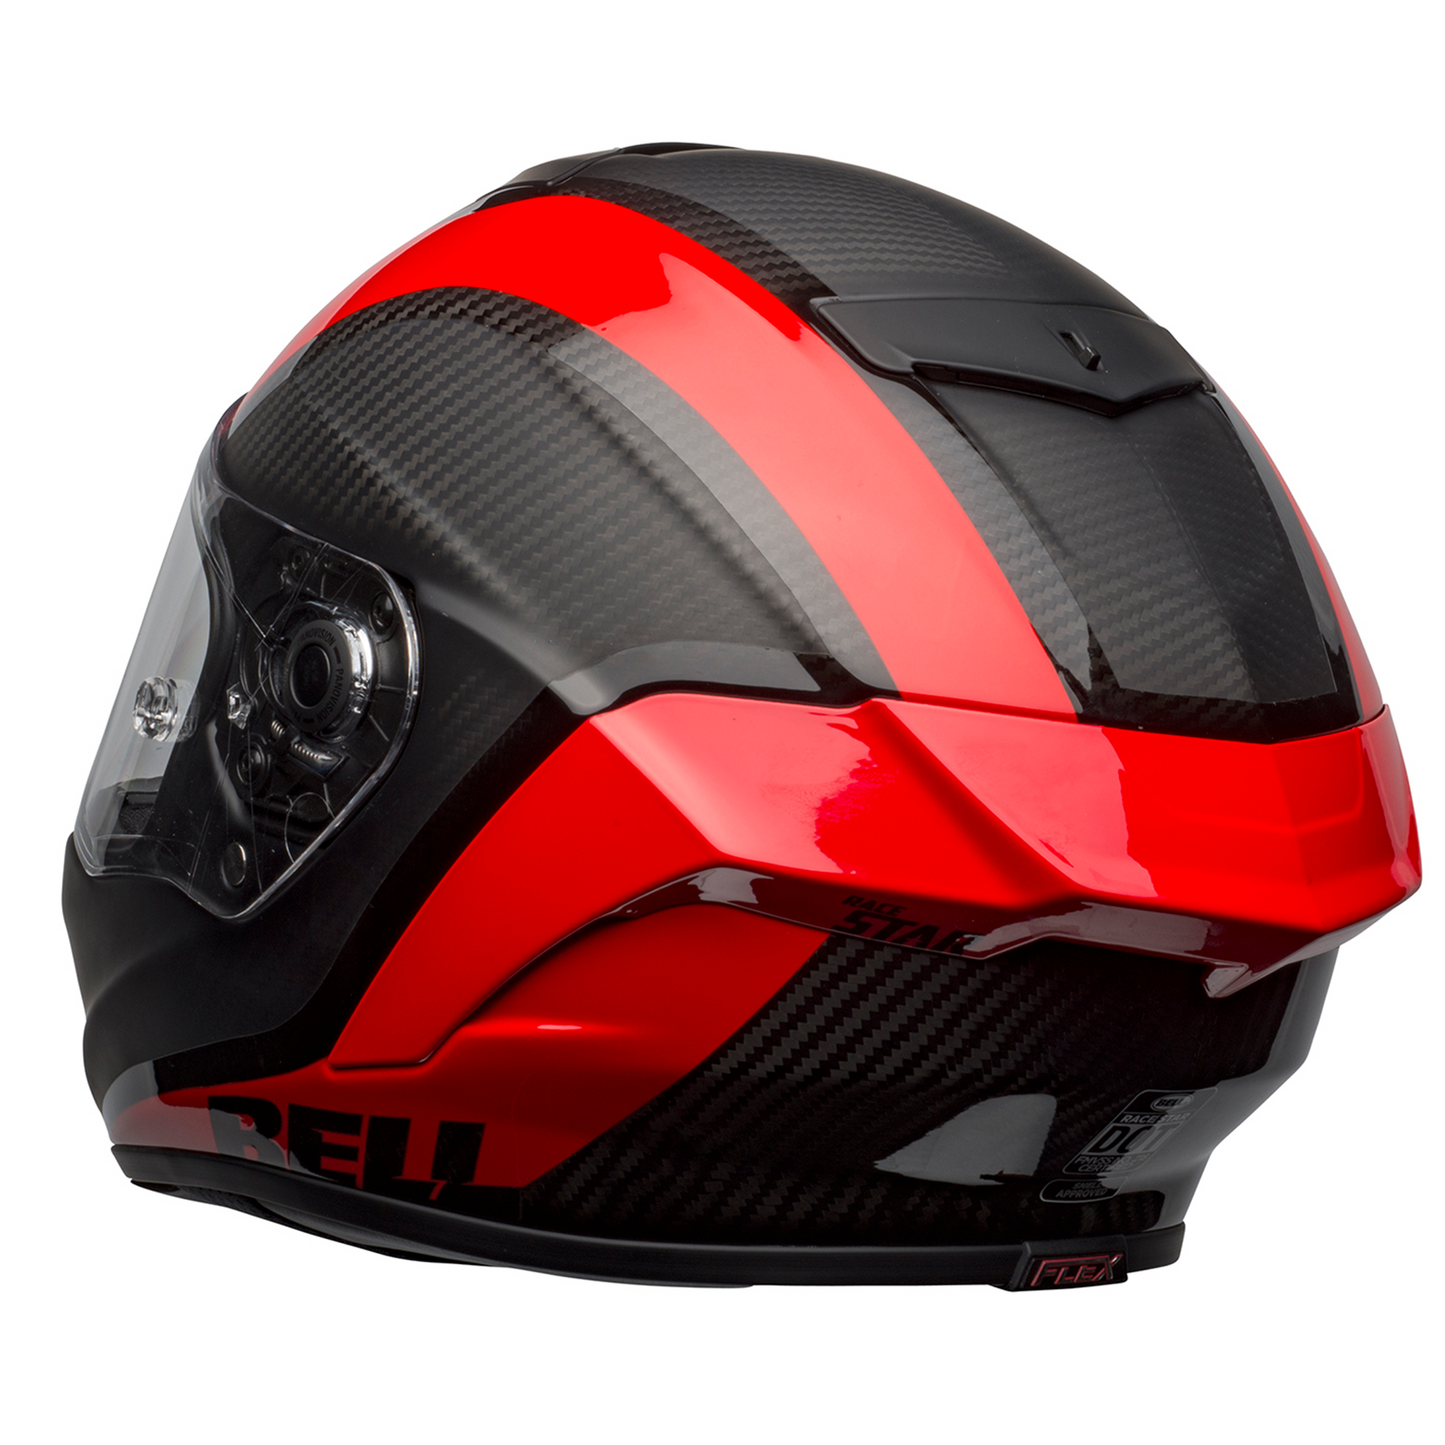 Bell Race Star Flex DLX - Tantrum 2 Matt/Gloss Black/Red - Includes Protint Visor